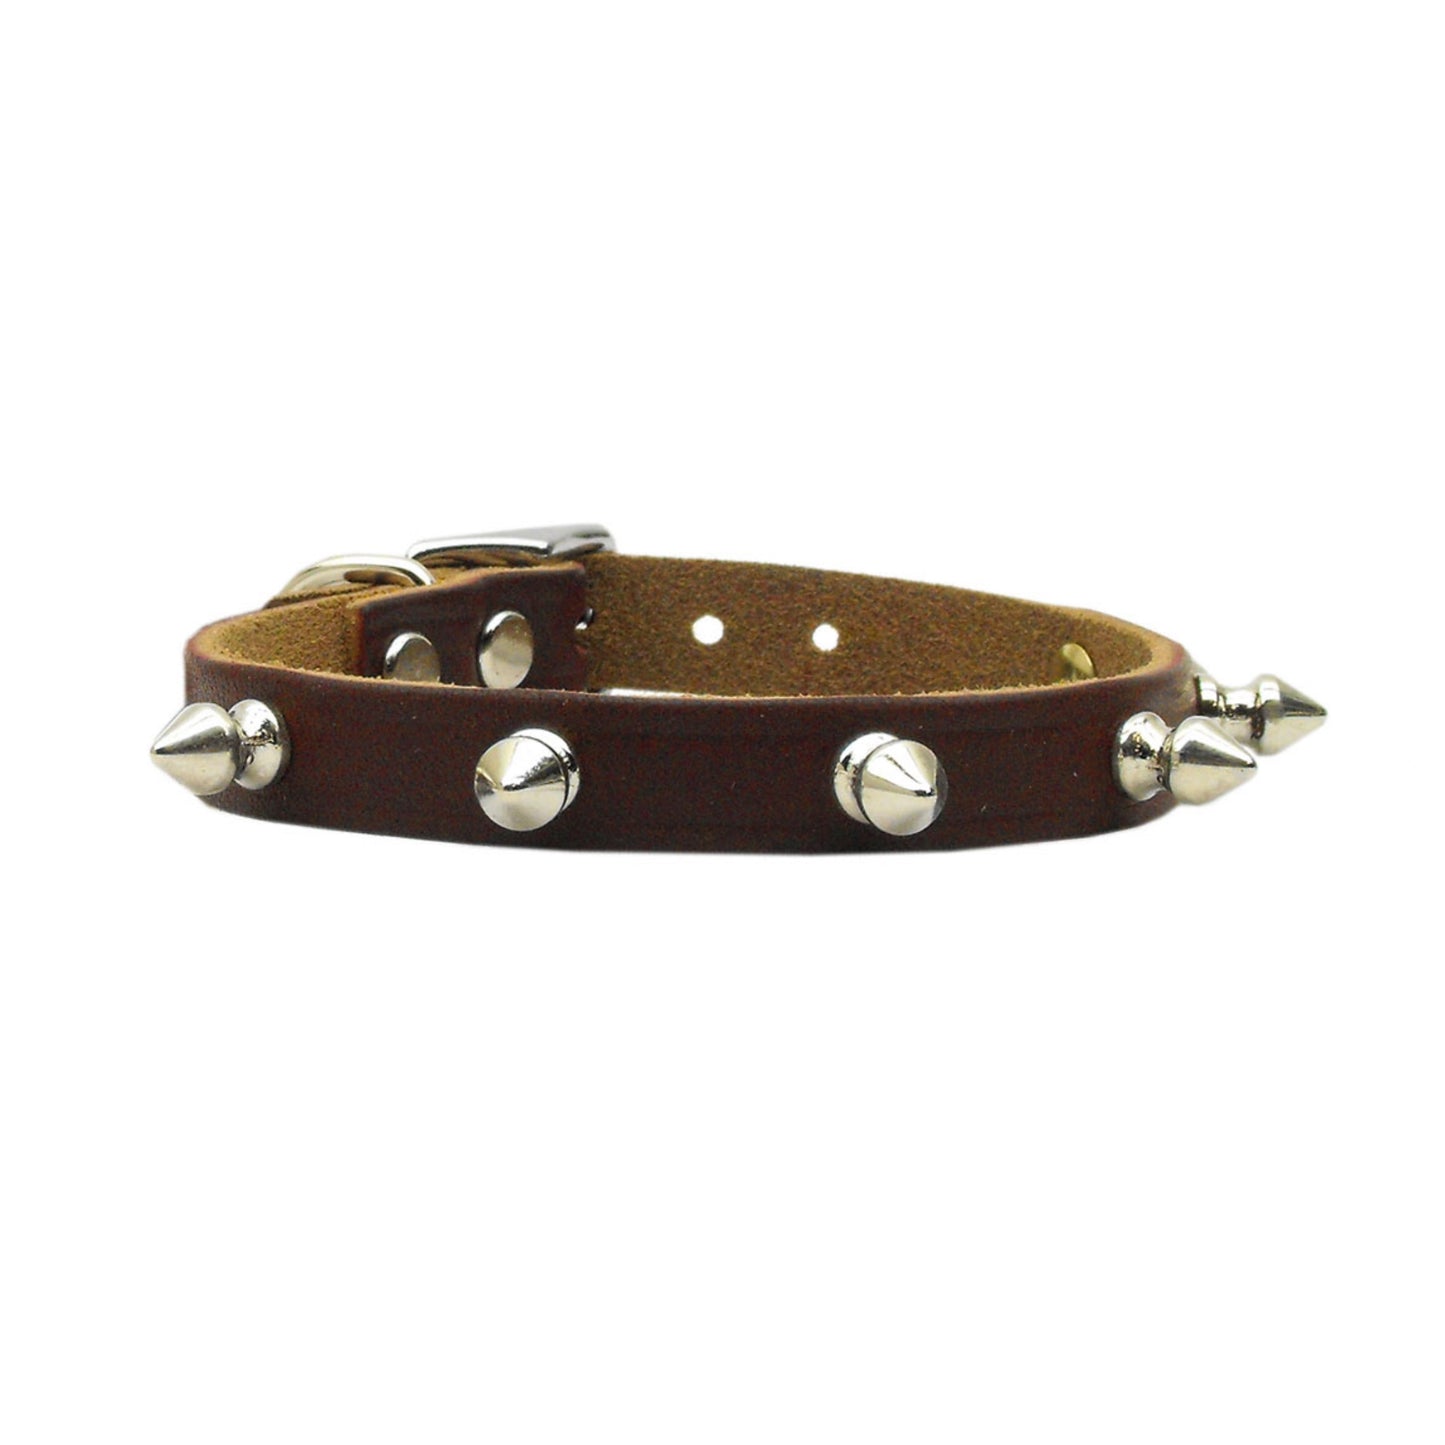 Spike Leather Dog Collar